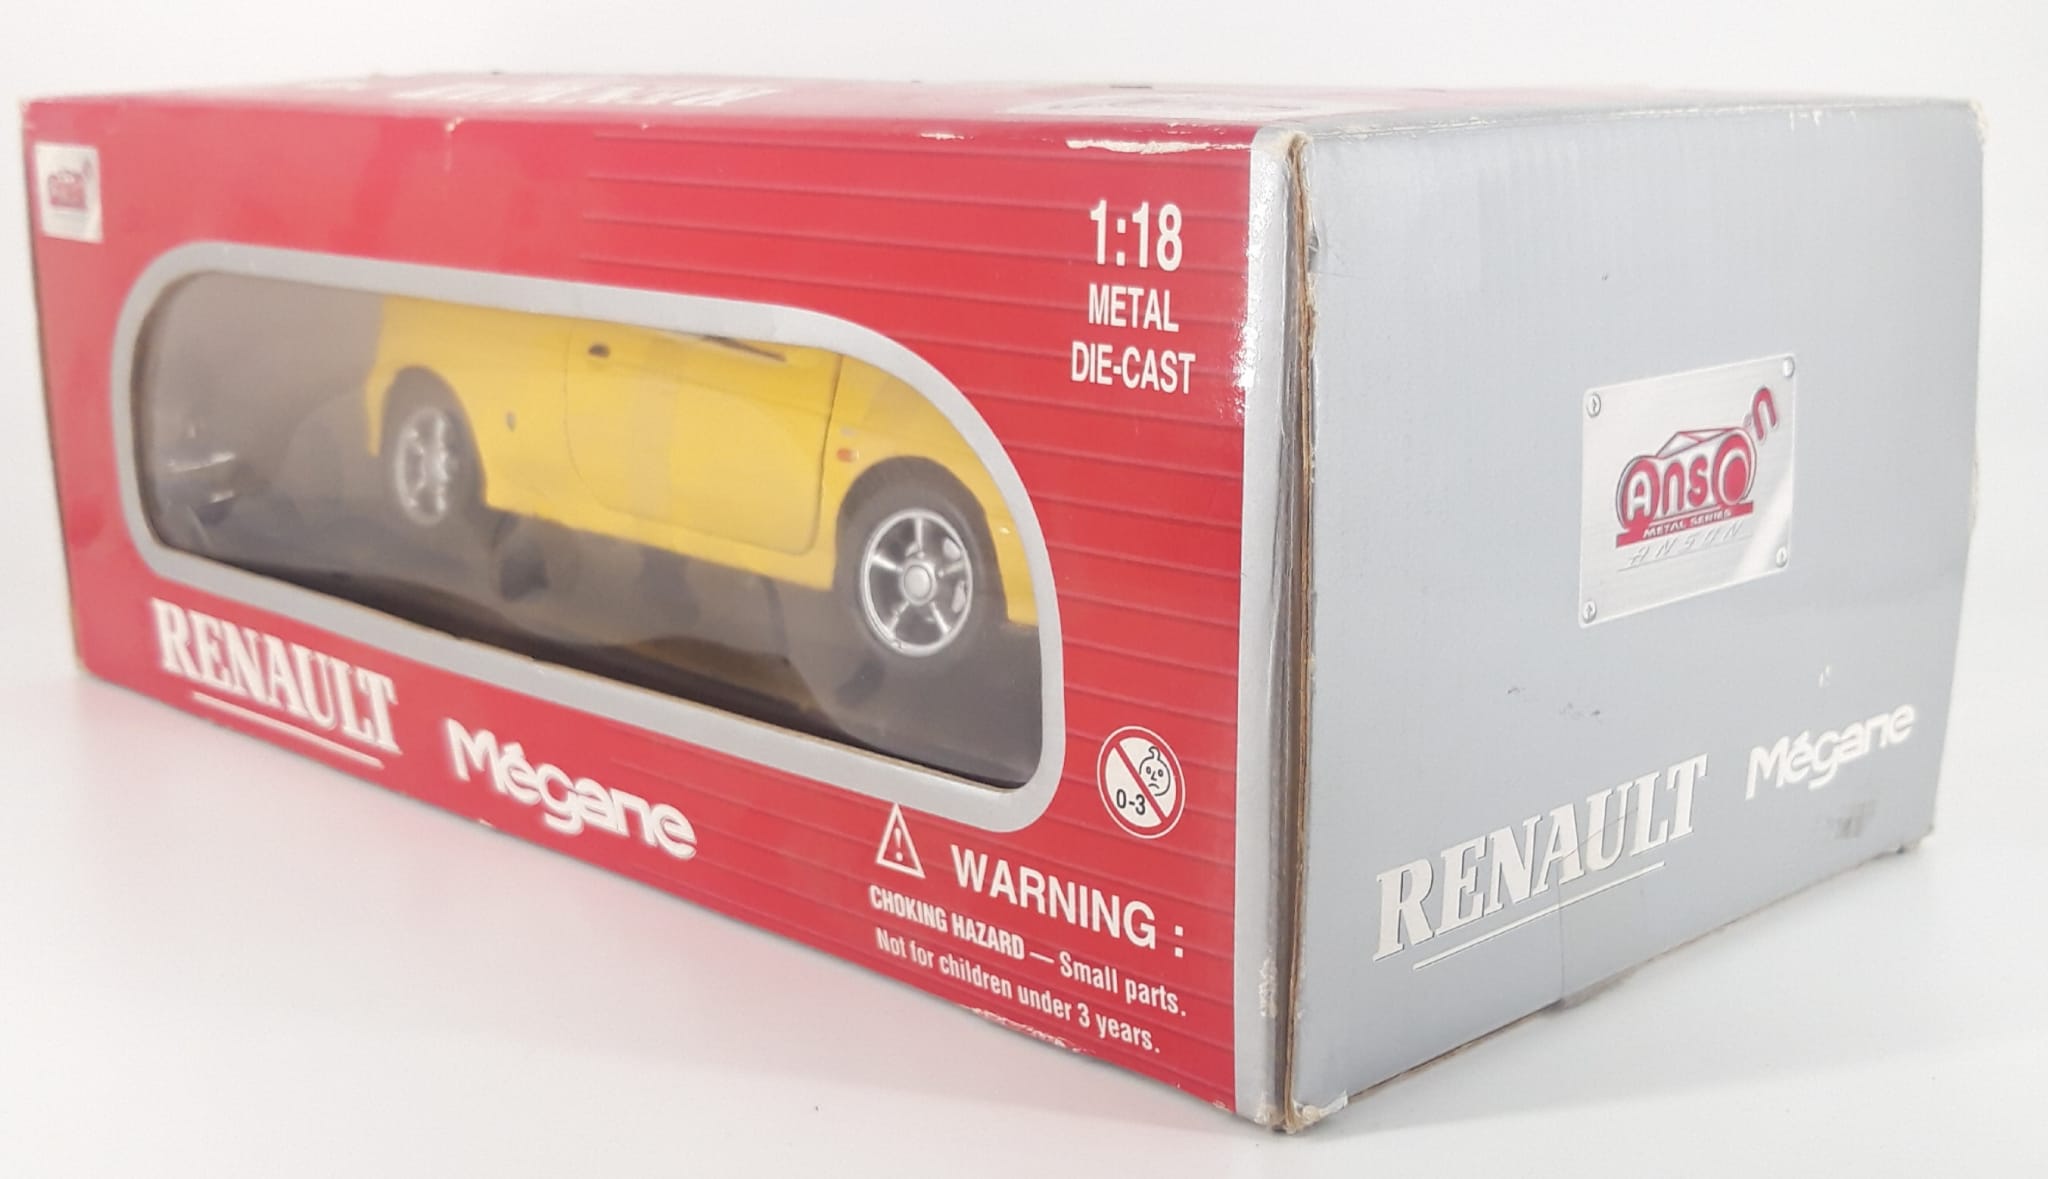 Renault Megane 1:18